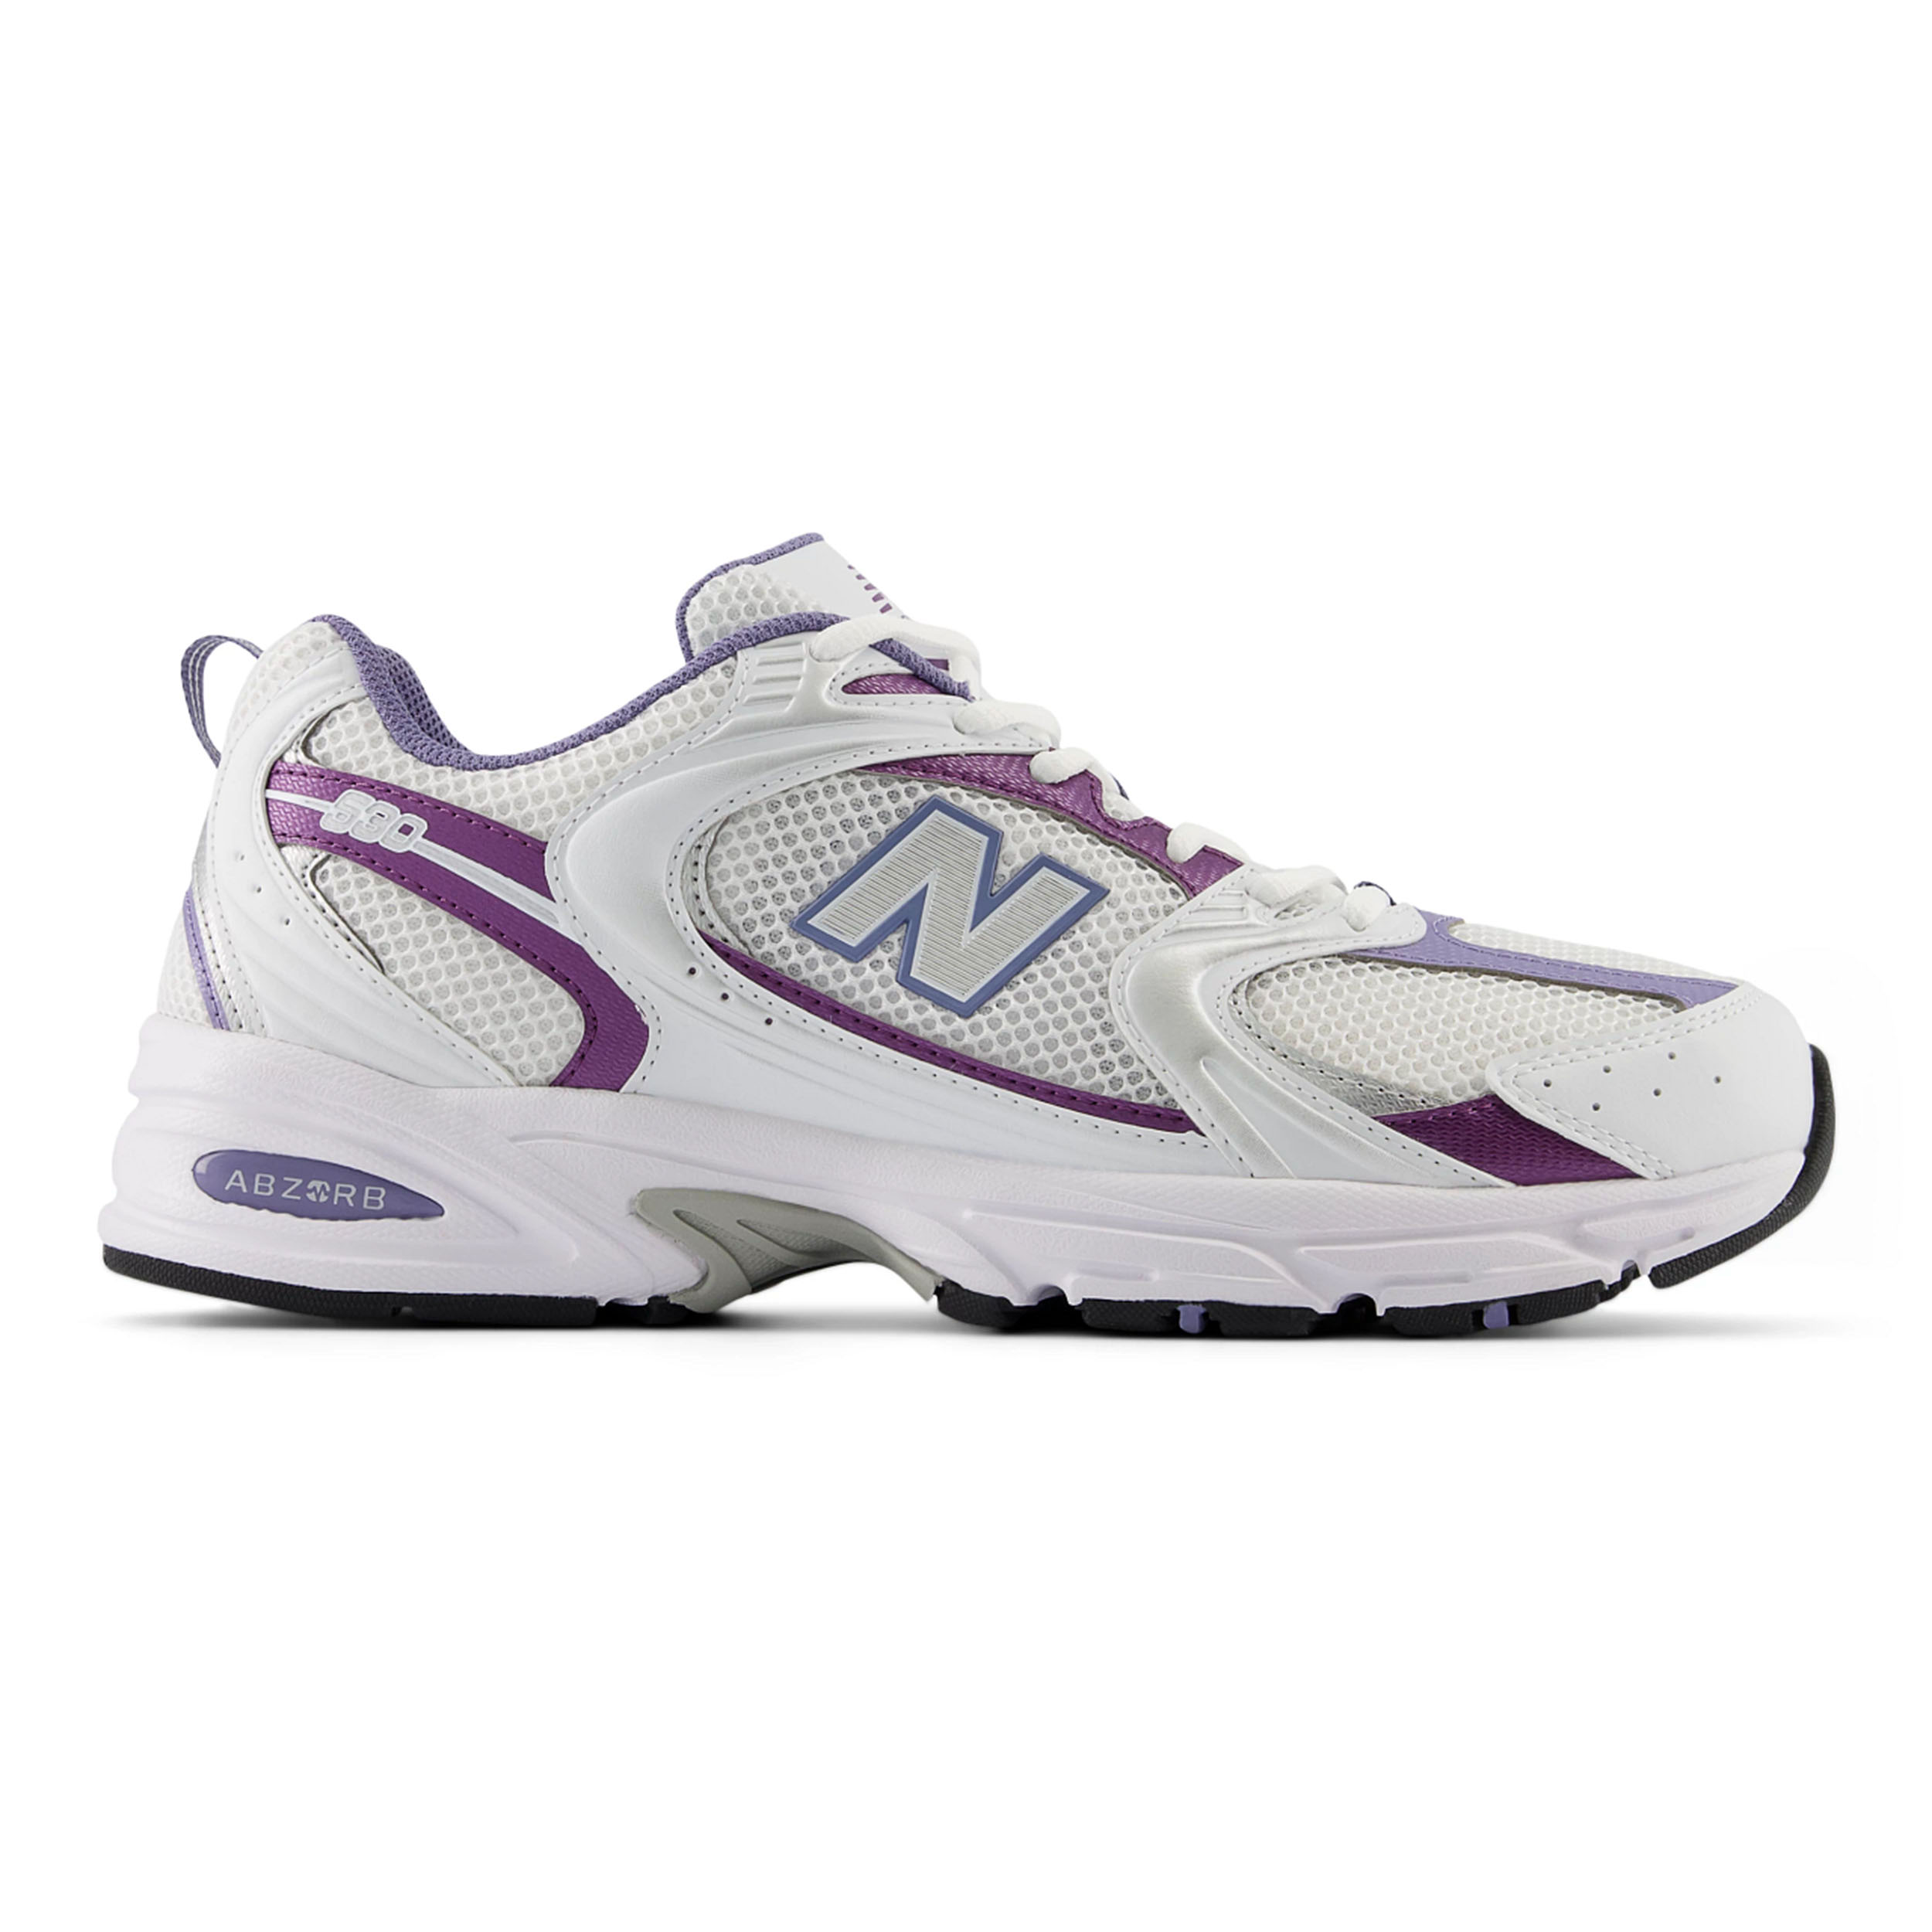 New Balance 530 Sneaker White/Dusted Grape